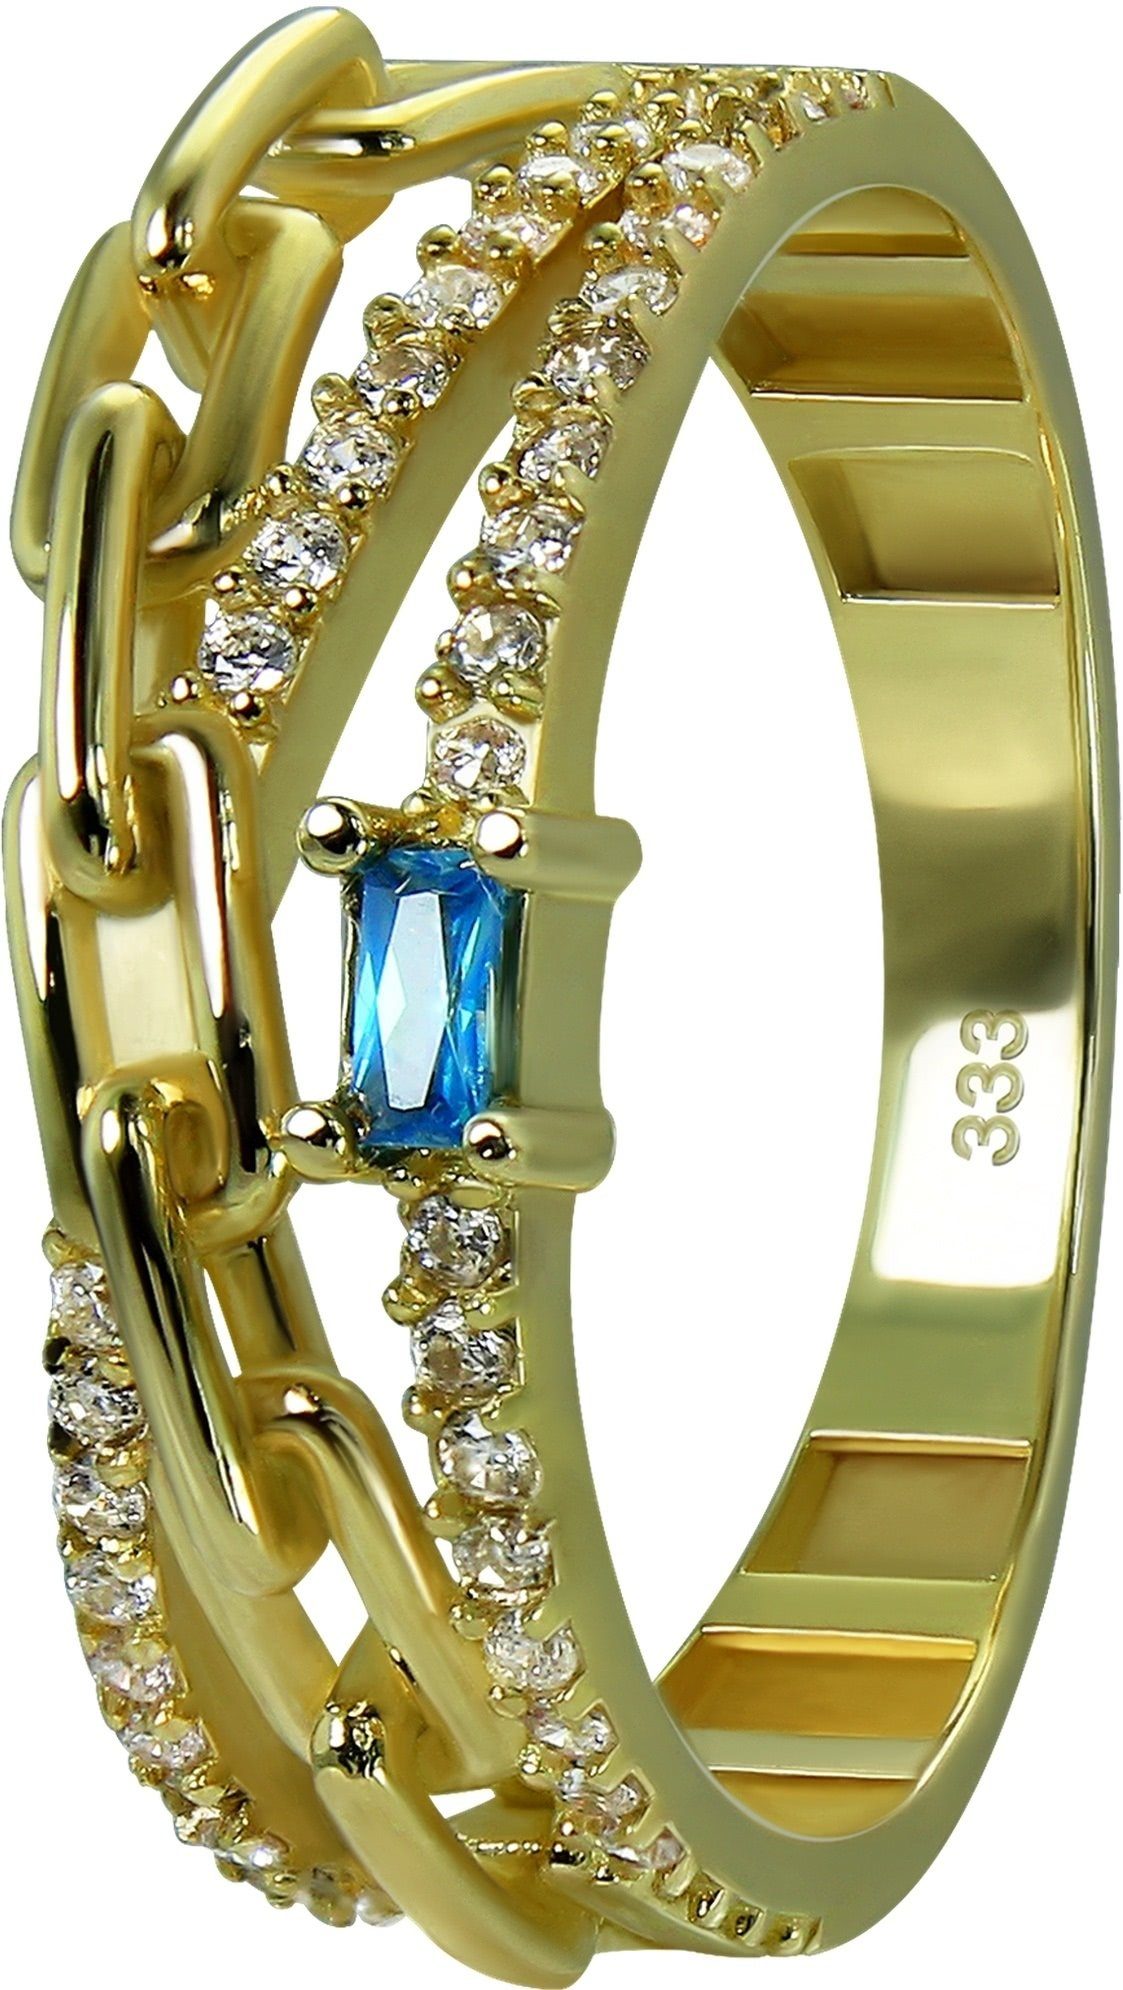 GoldDream Goldring GoldDream Gold Ring Glamour Gr.54 (Fingerring), Damen Ring Glamour 333 Gelbgold - 8 Karat, Farbe: gold, weiß, hellblau